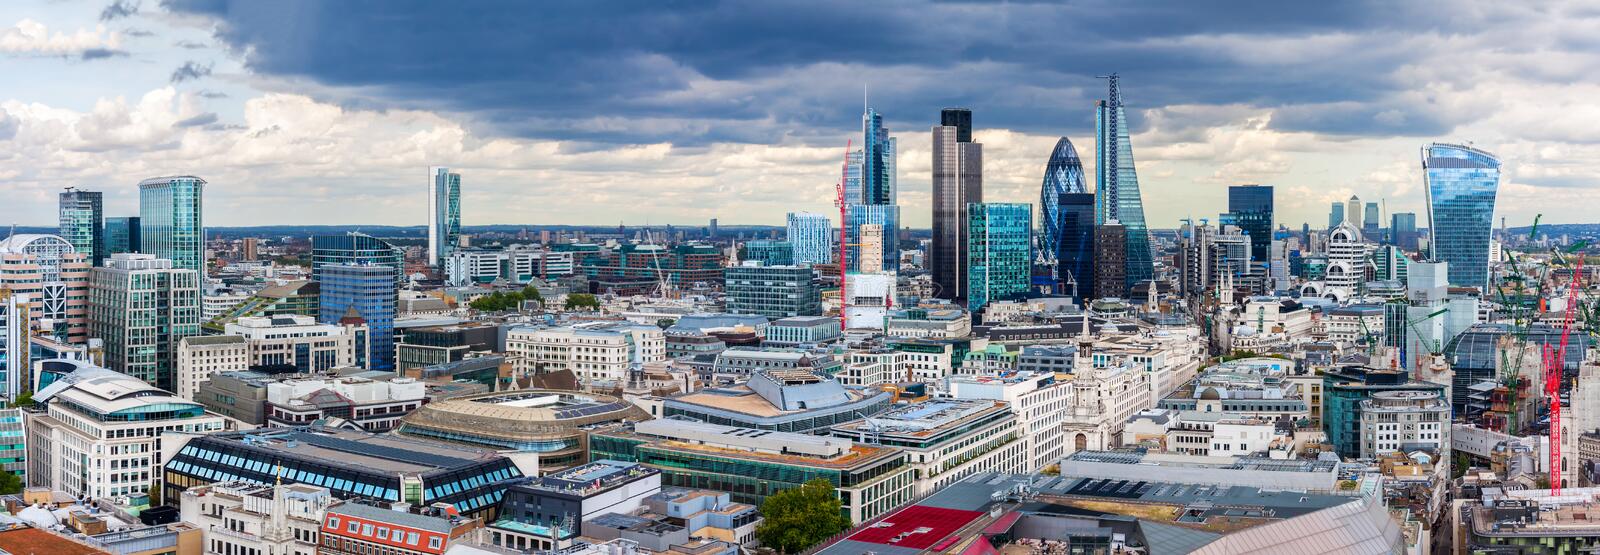 City of London Panorama